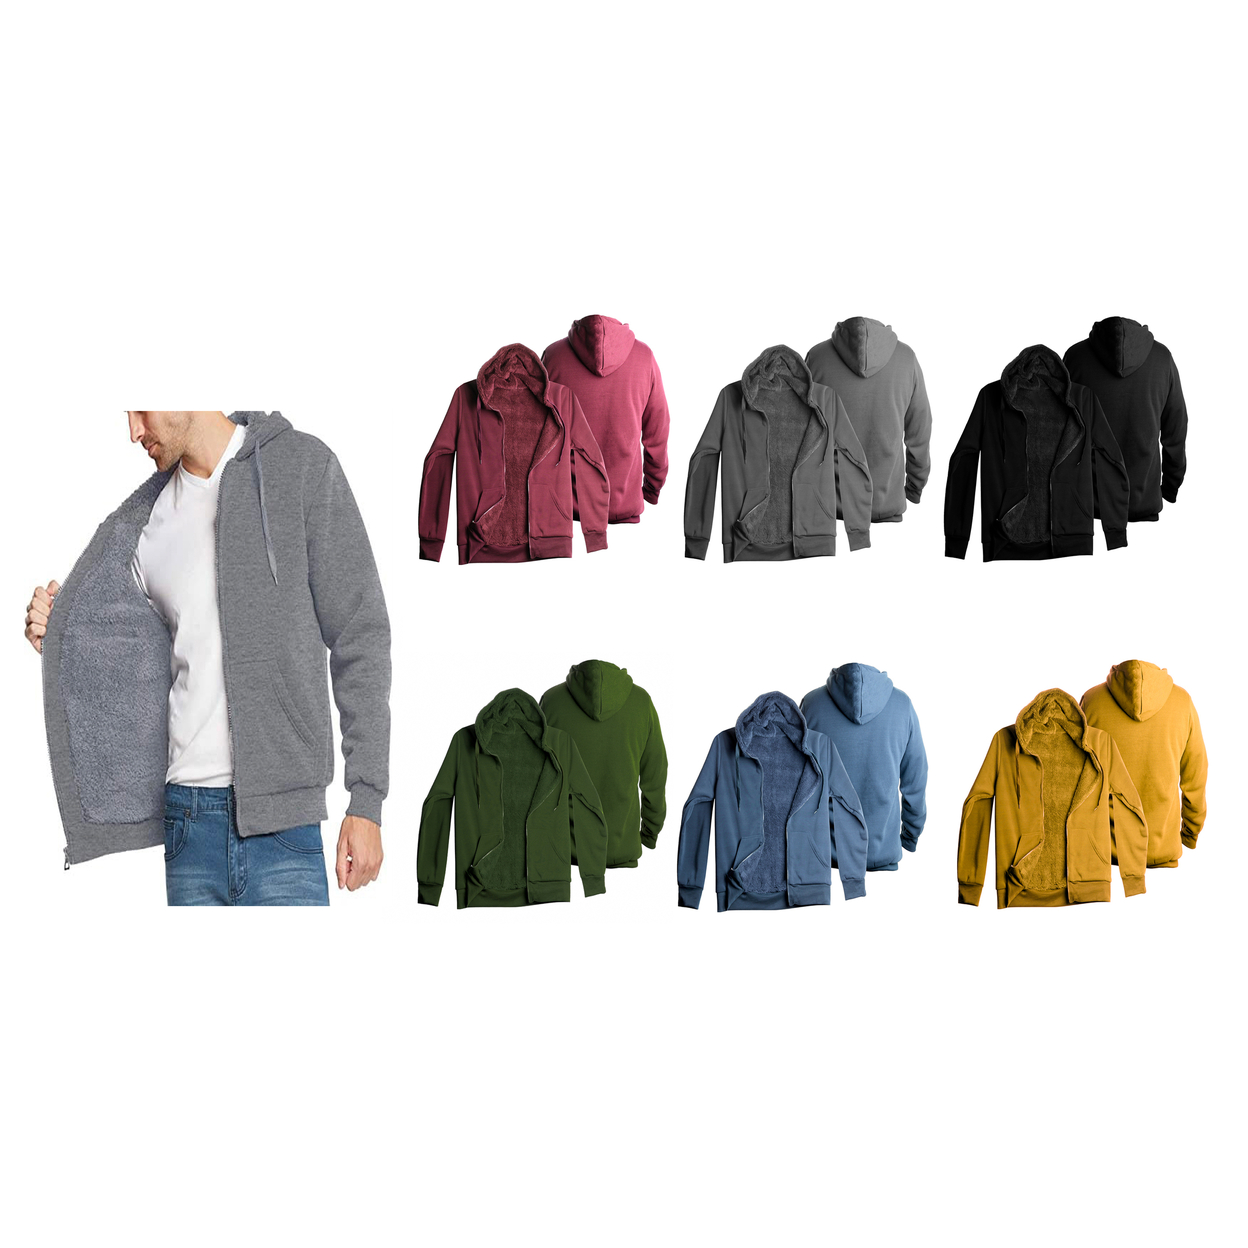 Men's Big & Tall Heavyweight Soft Sherpa Lined Fleece Zip-Up Hoodie Sweater Jacket - Charcoal, 1X